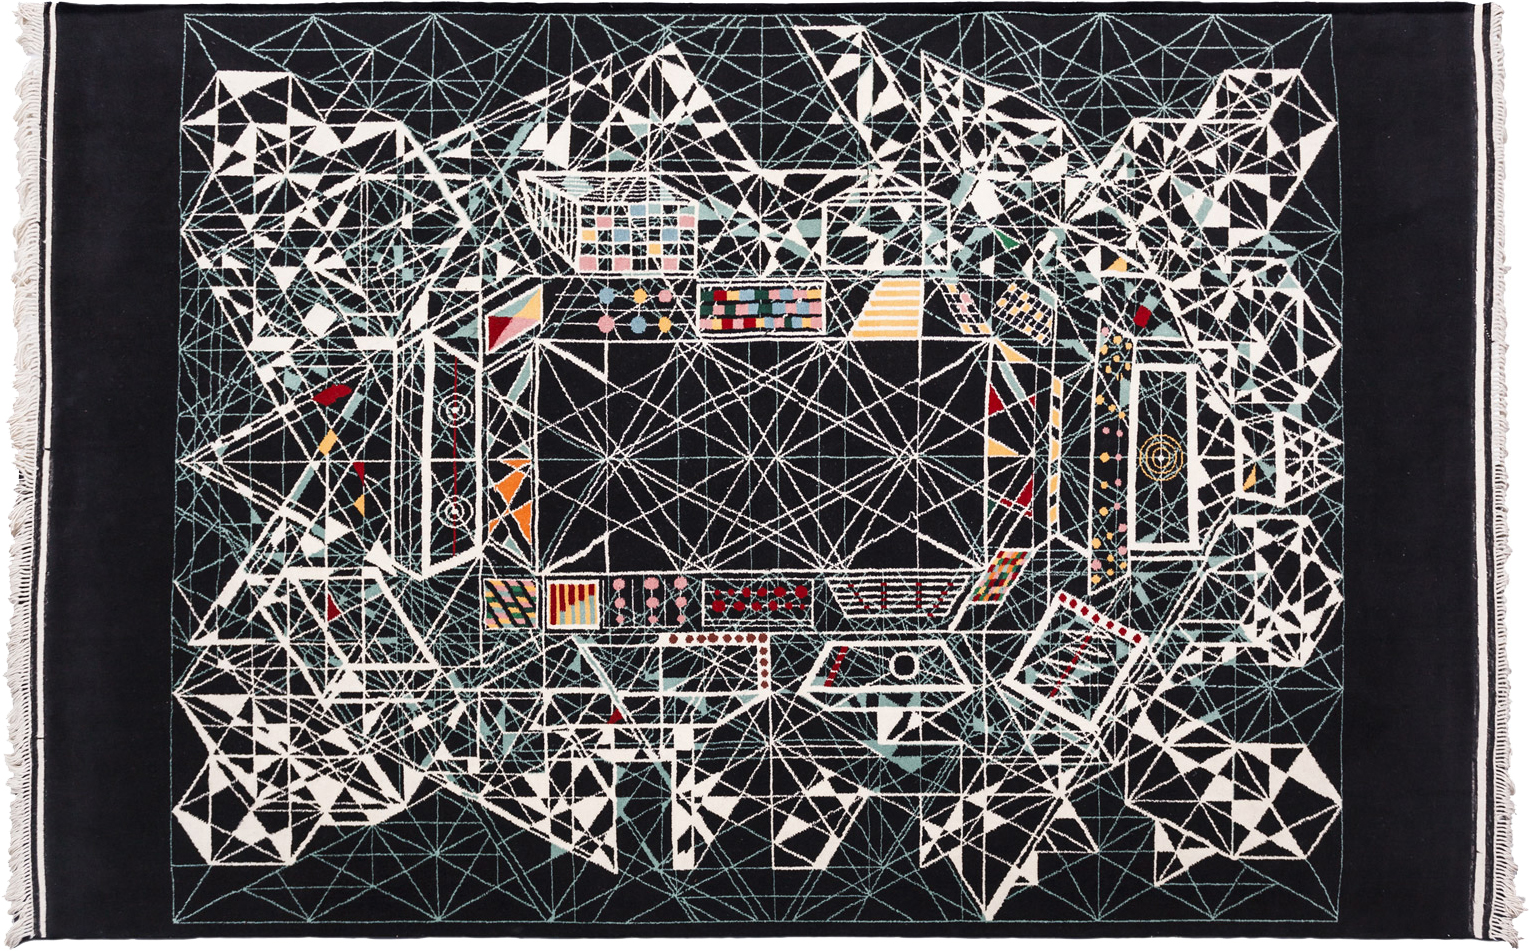 'Air Abraham' carpet by Viron Erol Vert sized 2.70m x 3.40m (8'10" x 11'2"), circa 2012. | Image courtesy of Viron Erol Vert.